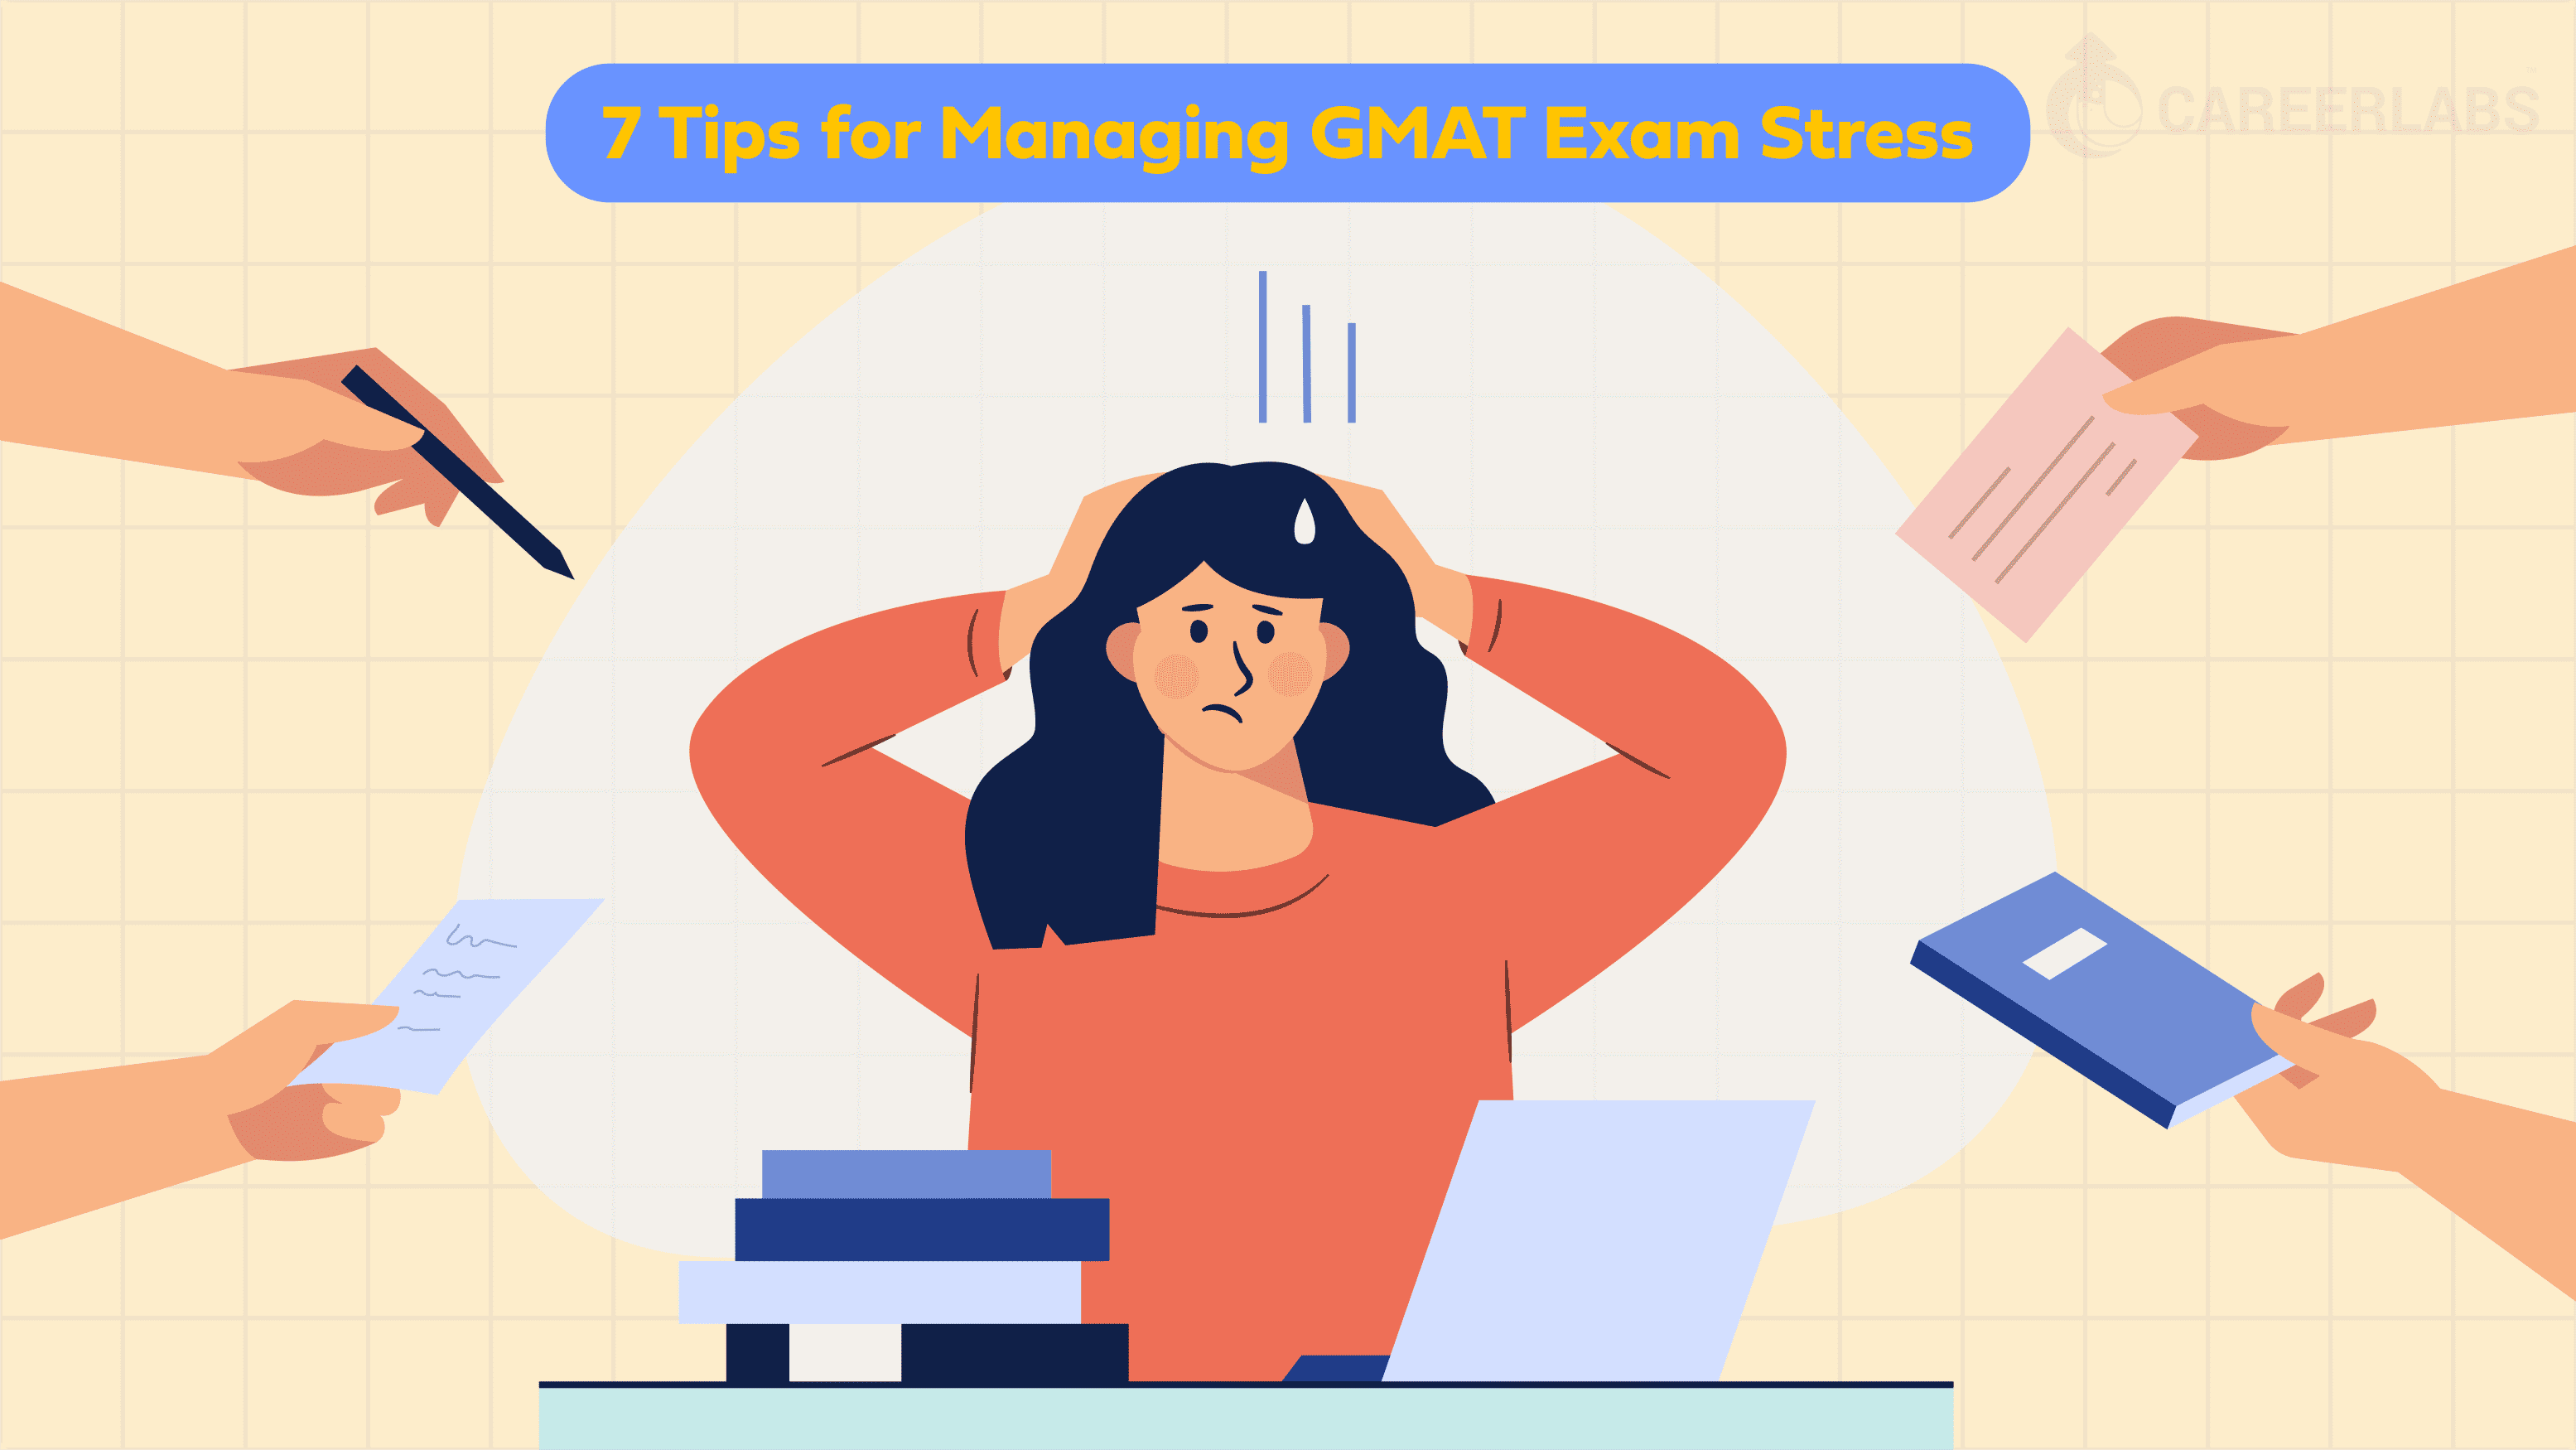 7 Tips for Managing GMAT Exam Stress